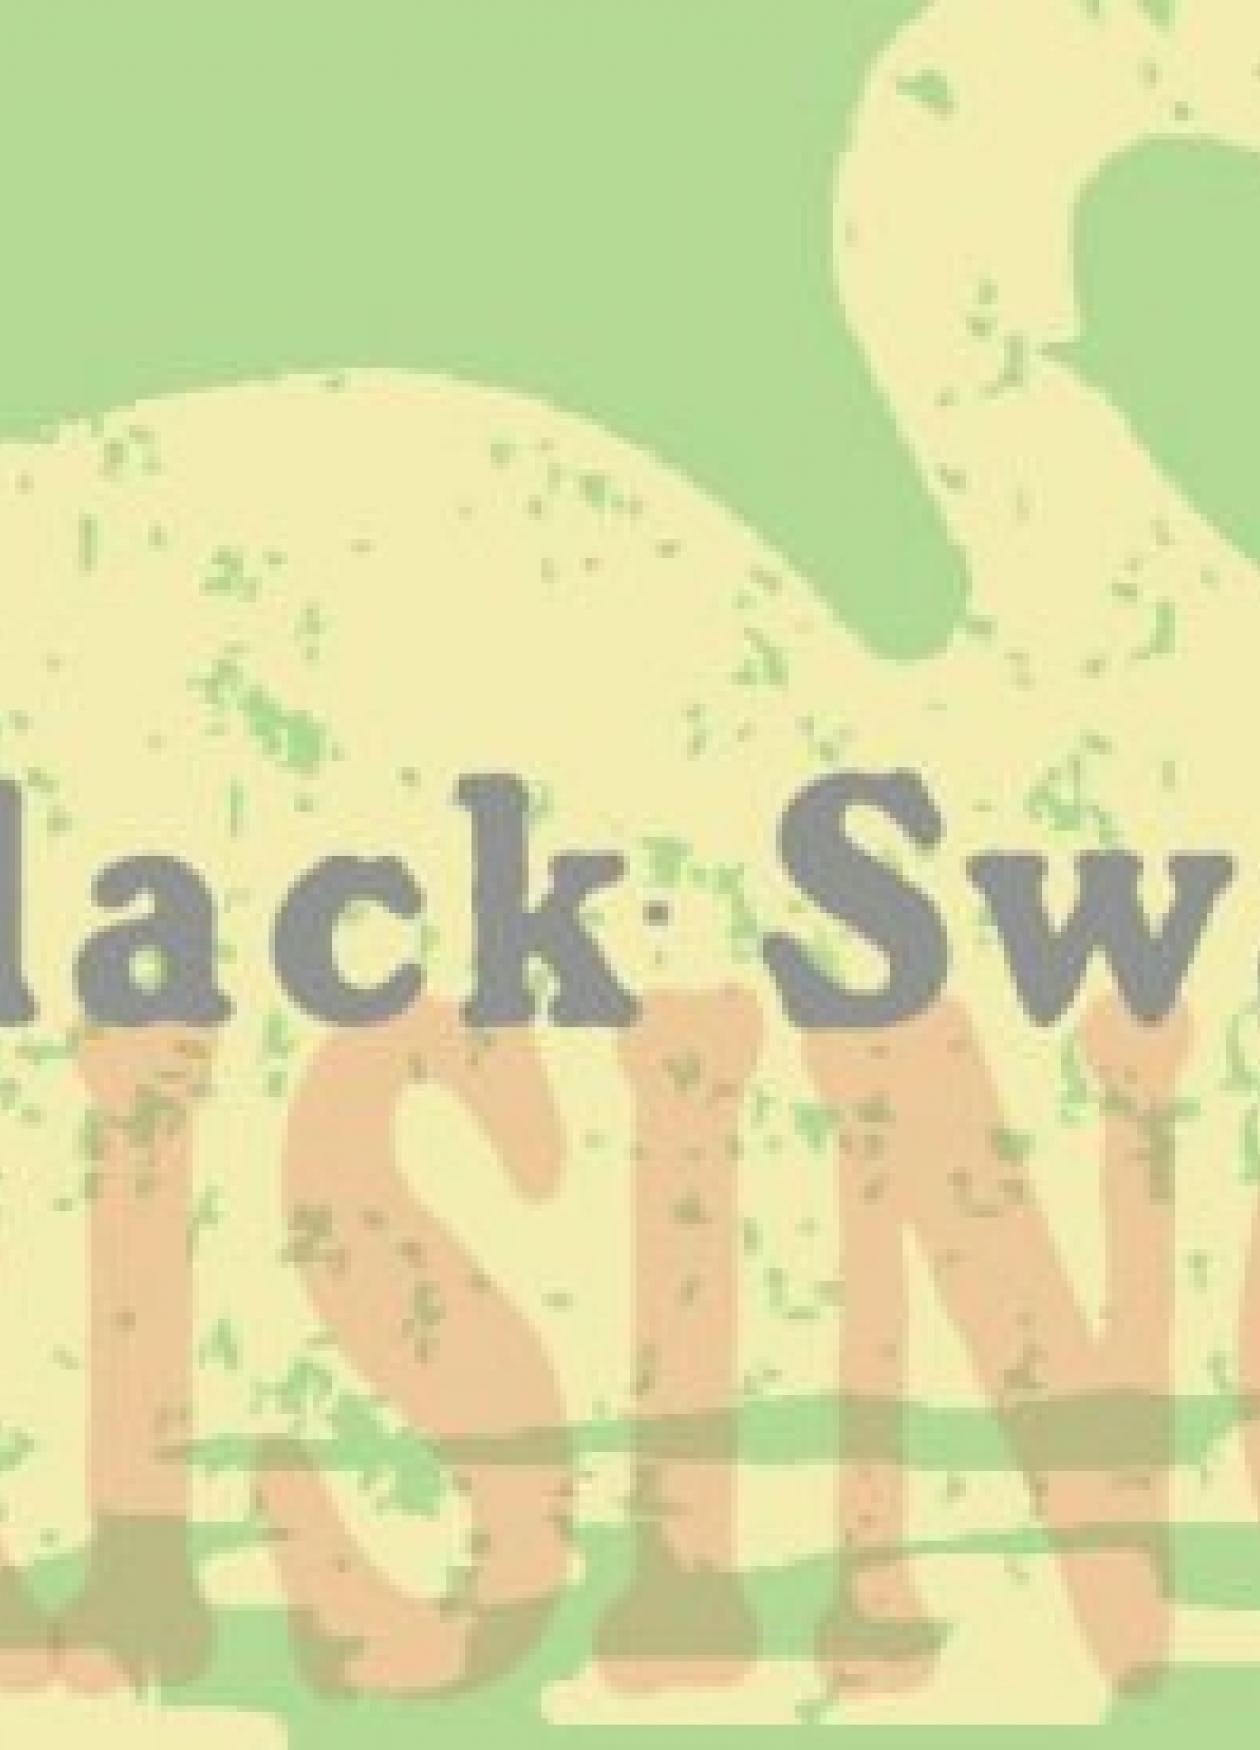 Black Swan Company Logo - Black Swan Rising. National Endowment for the Humanities (NEH)